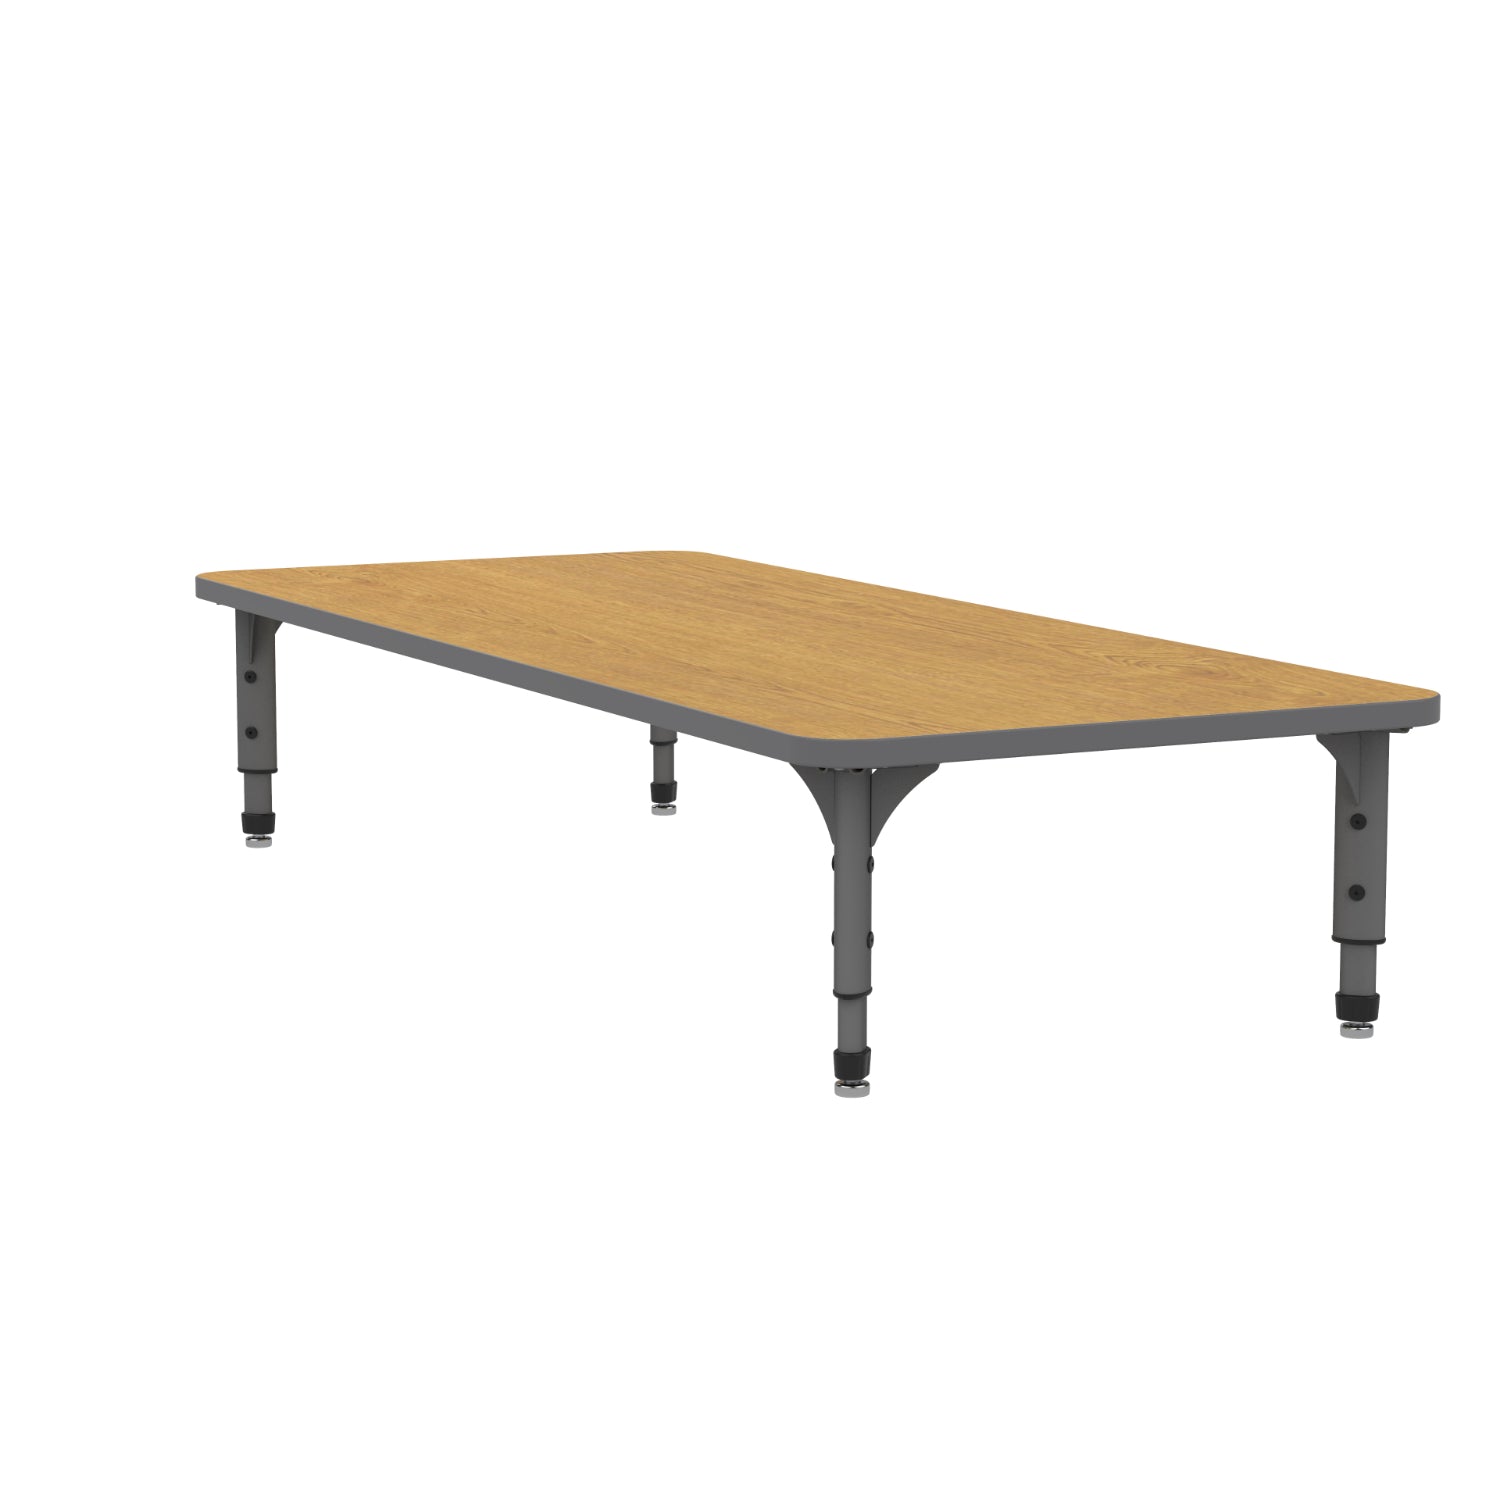 Adjustable Height Floor Activity Table, 30" x 72" Rectangle